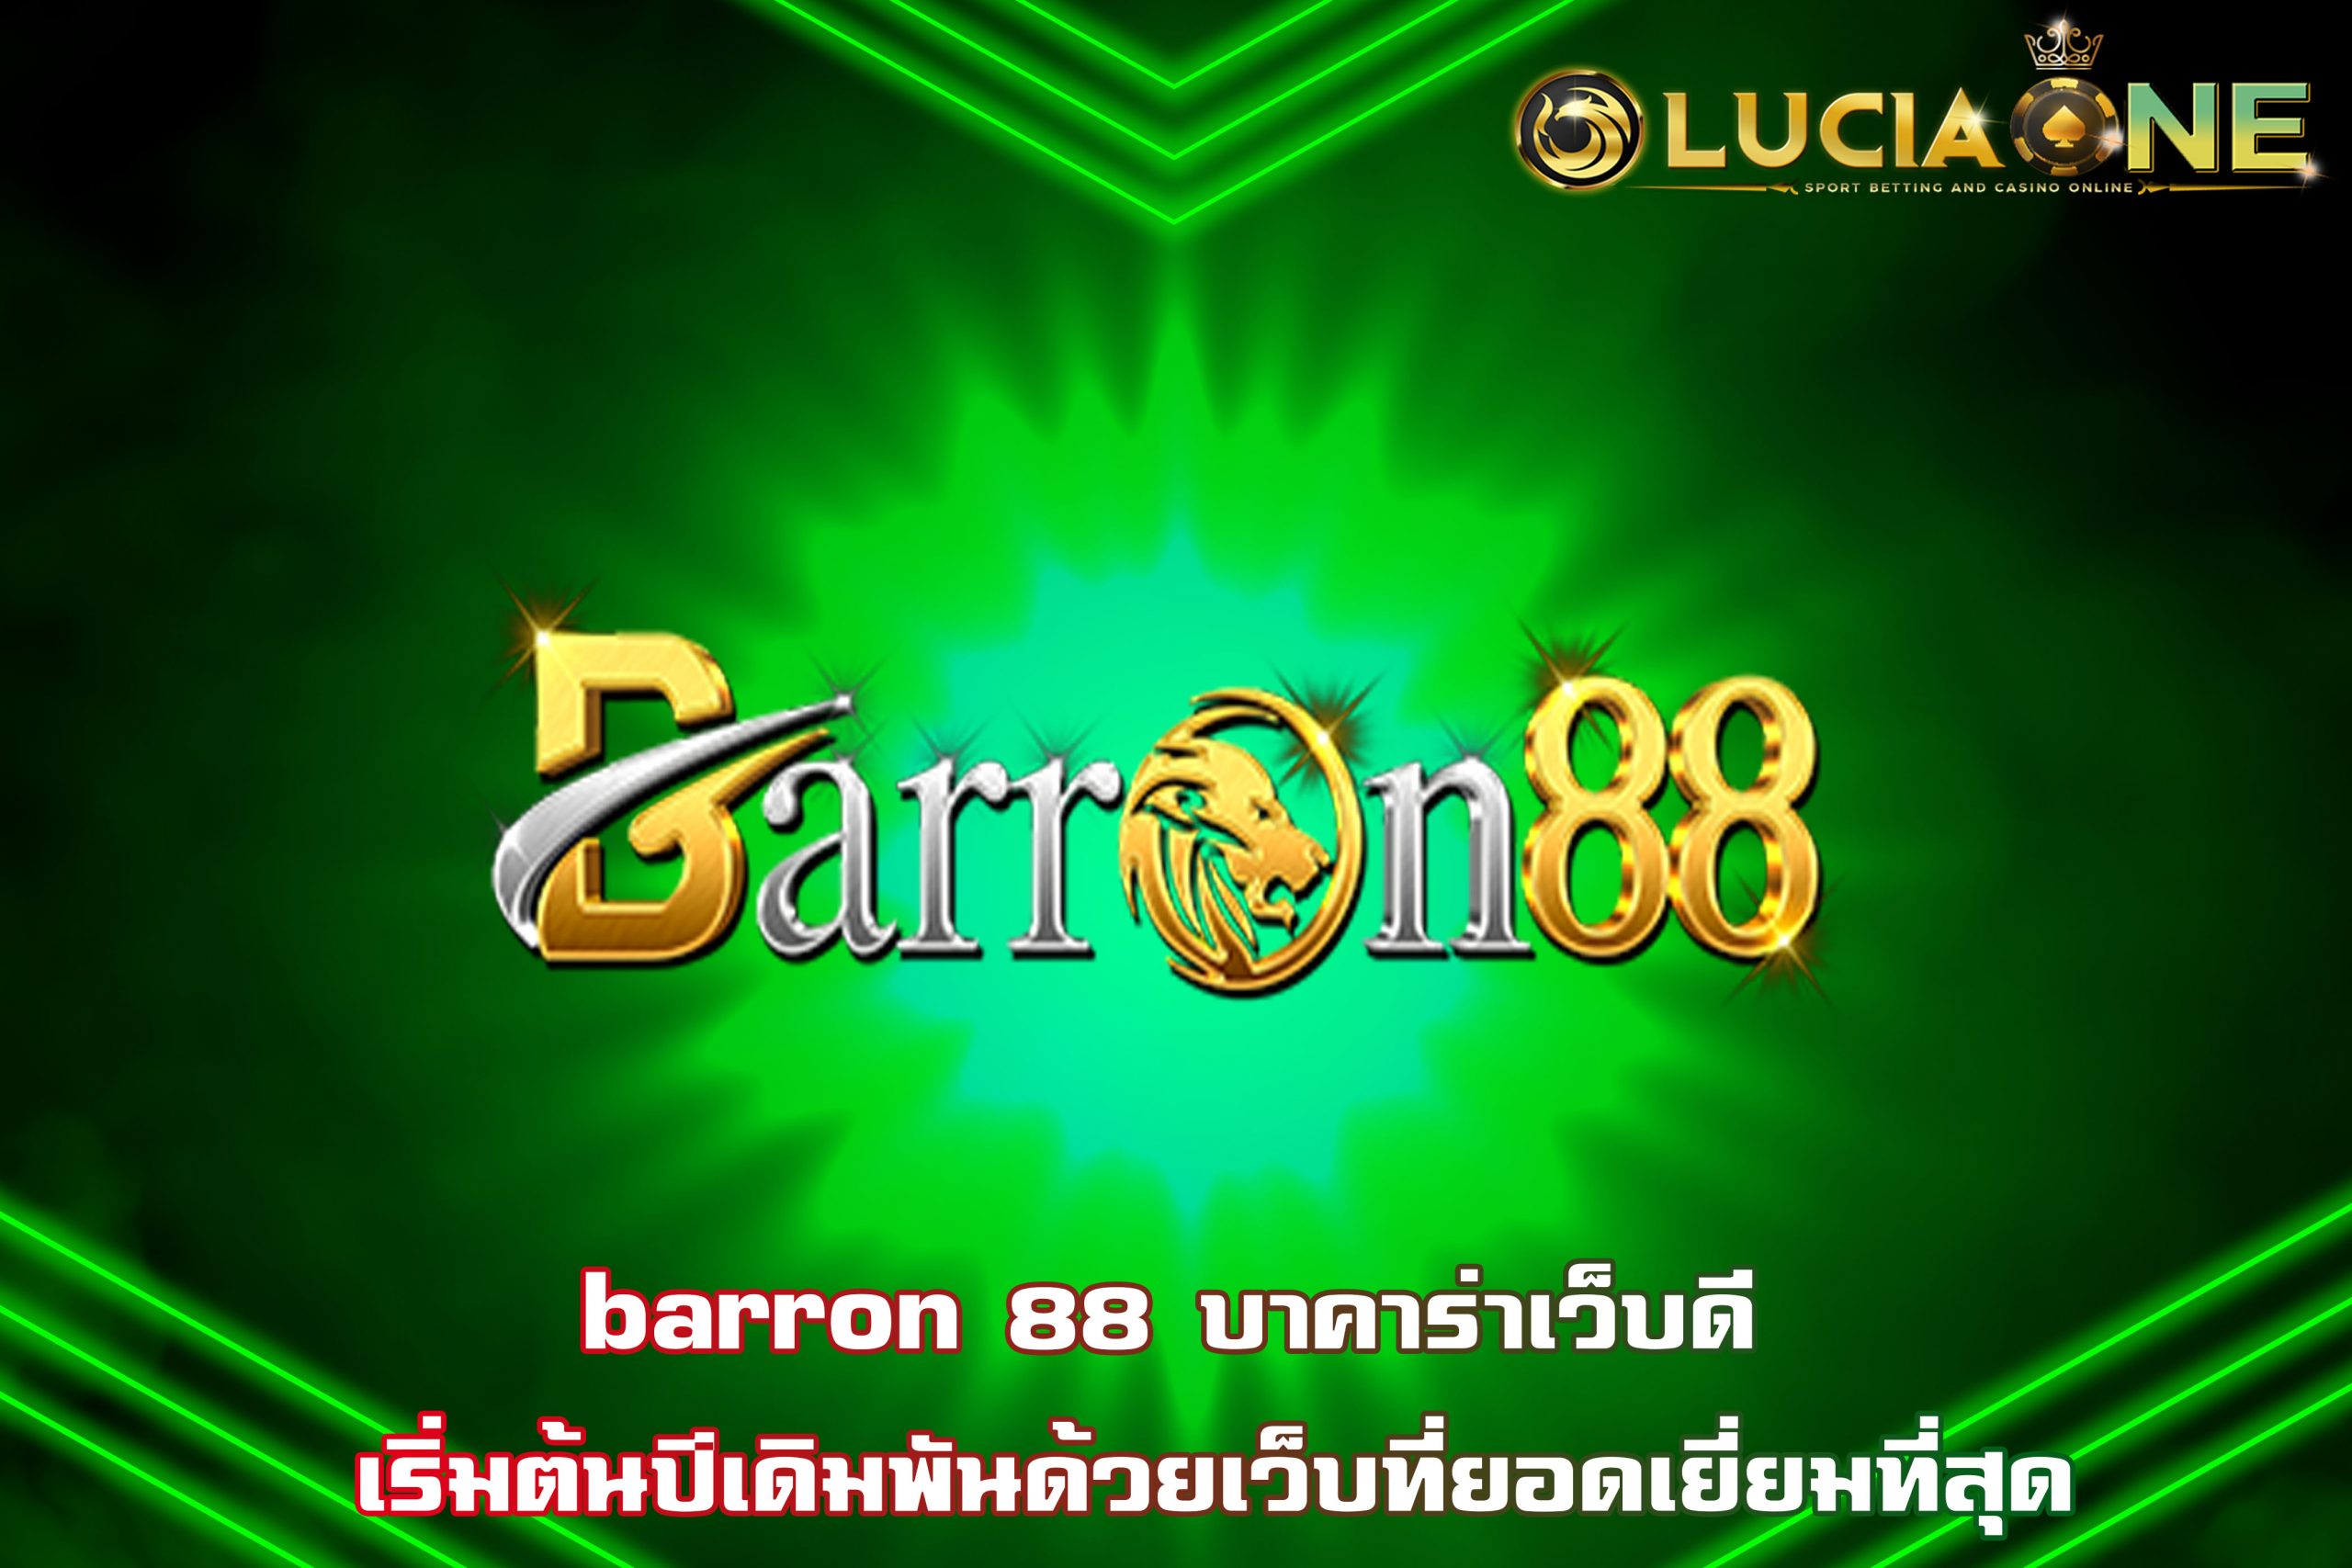 barron 88